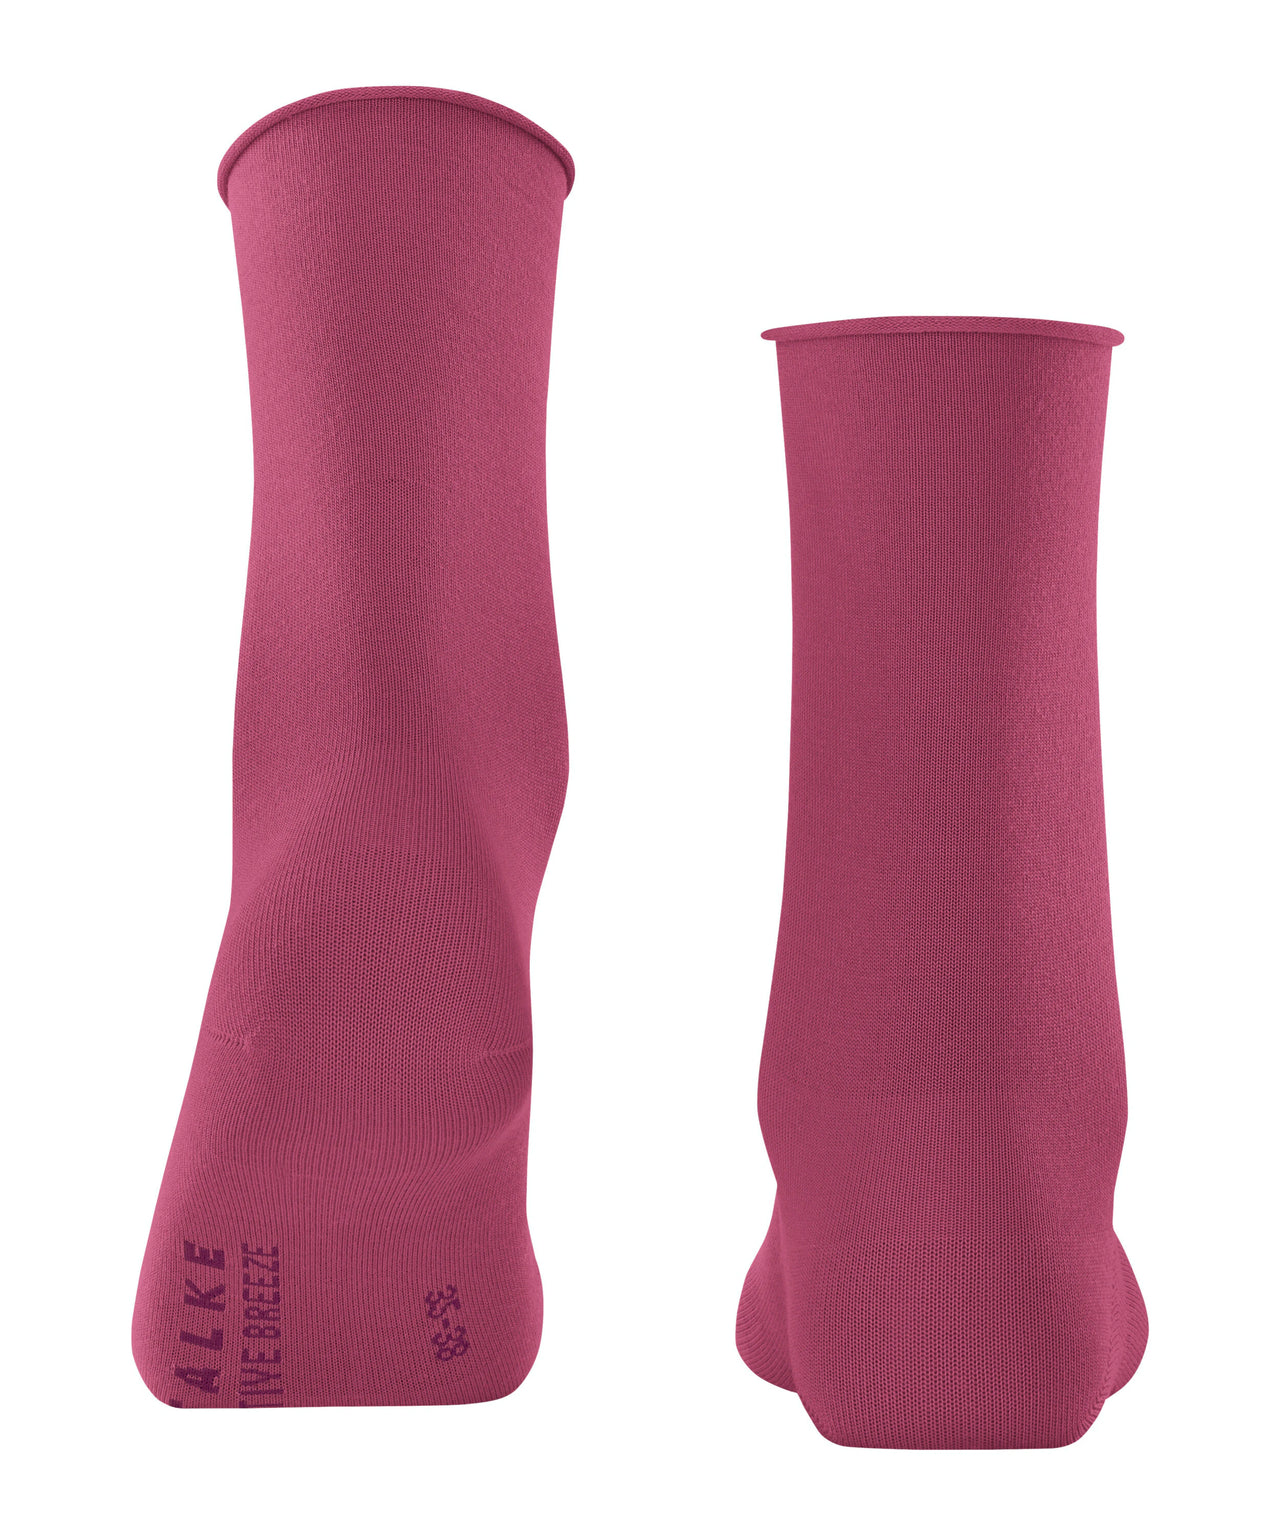 Falke Active Breeze Women's Socks - English Rose